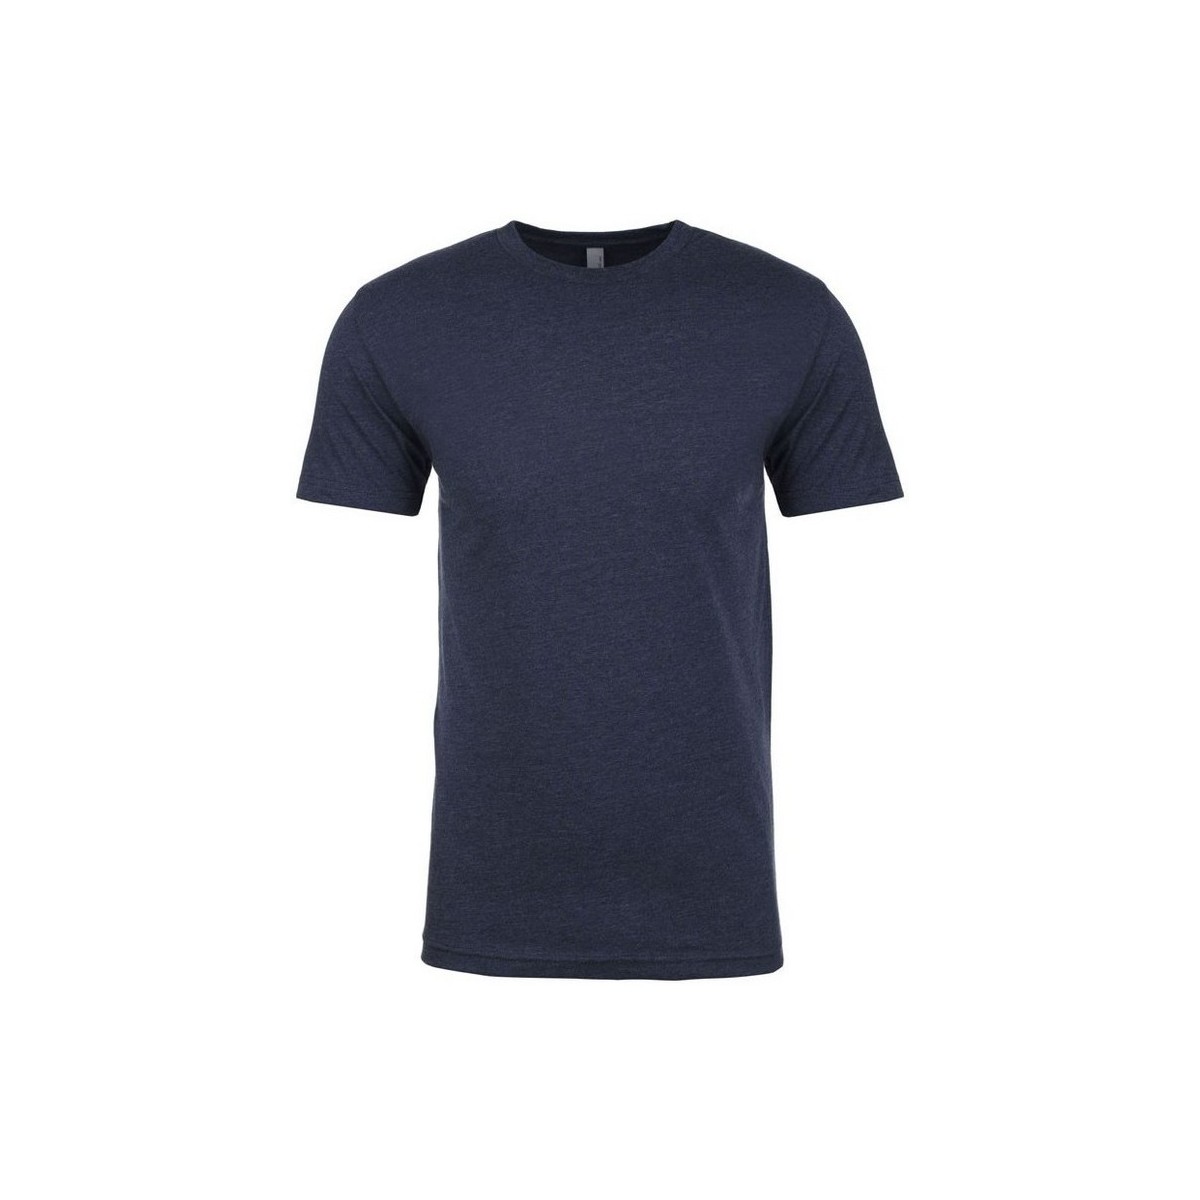 textil Camisetas manga larga Next Level CVC Azul